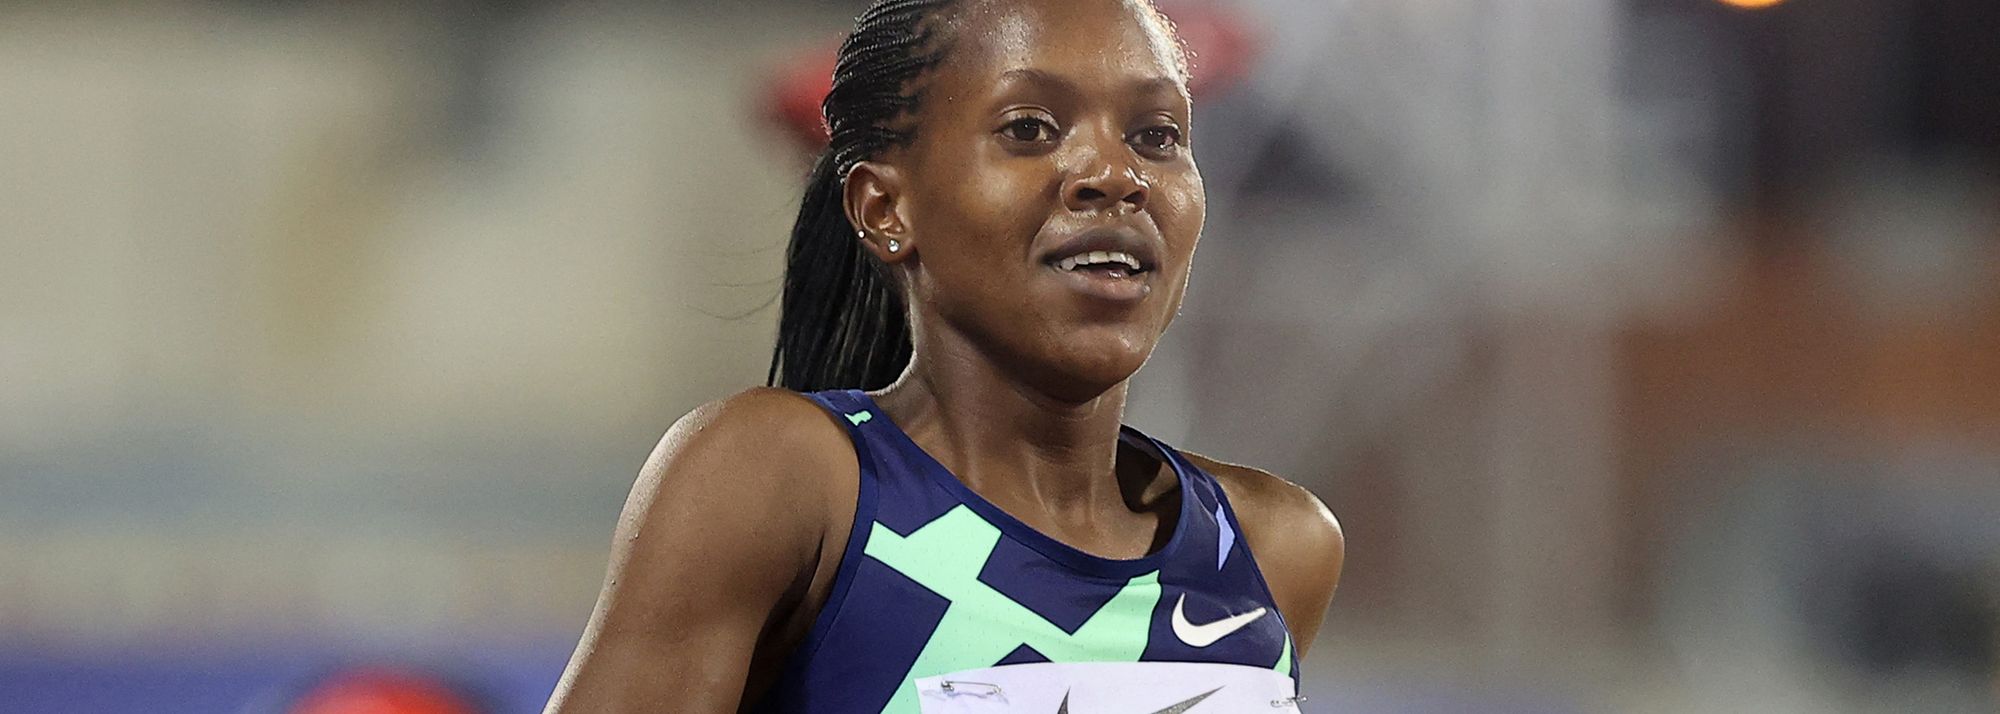 Kenya’s two-time world and Olympic 1500m champion Faith Kipyegon returns to the Wanda Diamond League meeting in Doha on 5 May looking to kickstart her season